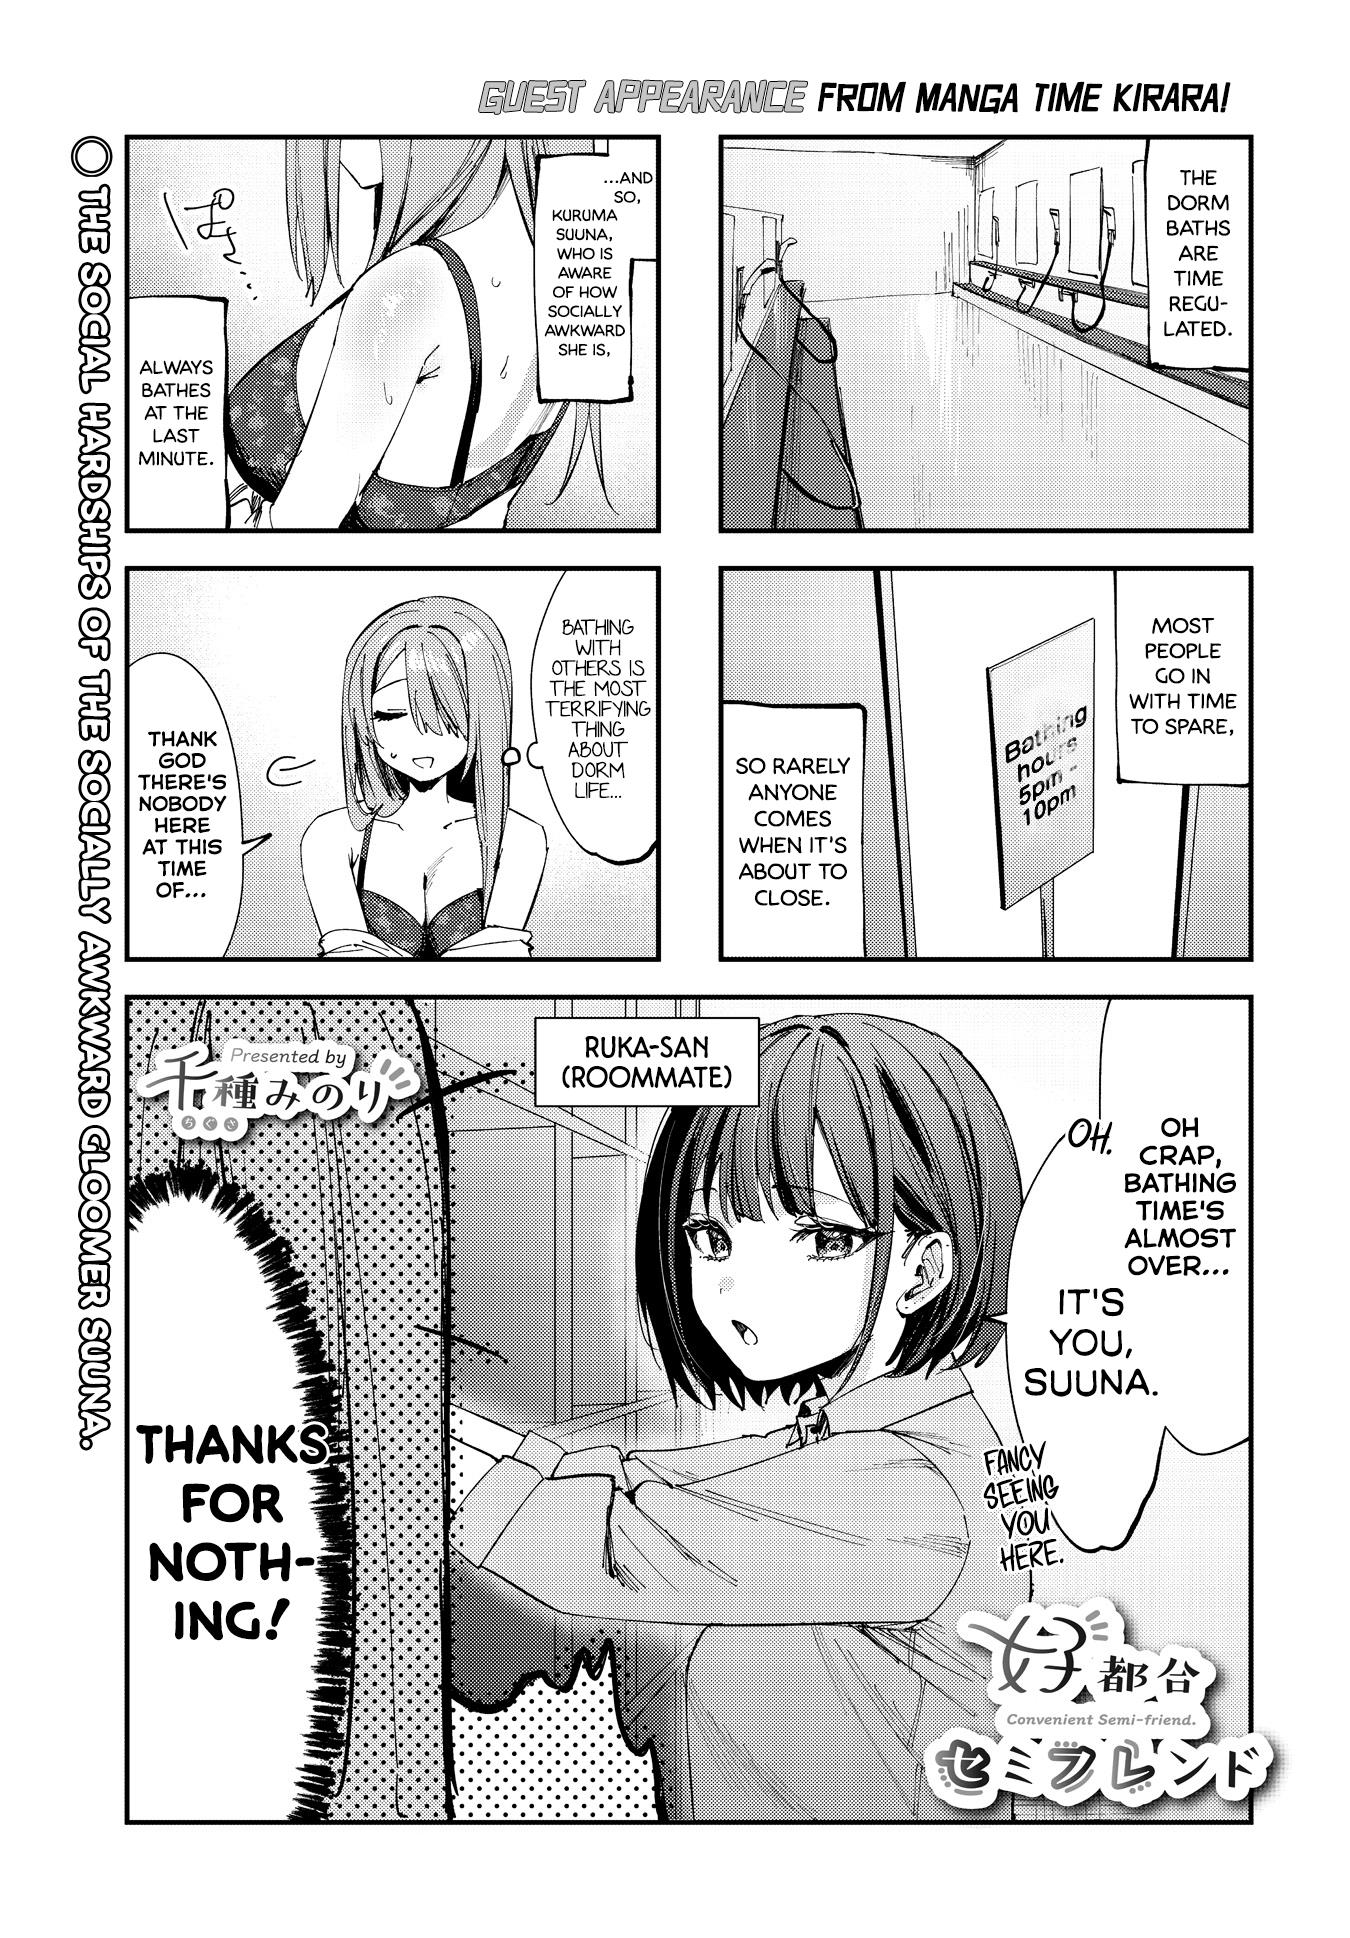 Convenient Semi-Friend Chapter 11.75: Manga Time Kirara Carat Guest Chapter - Picture 1